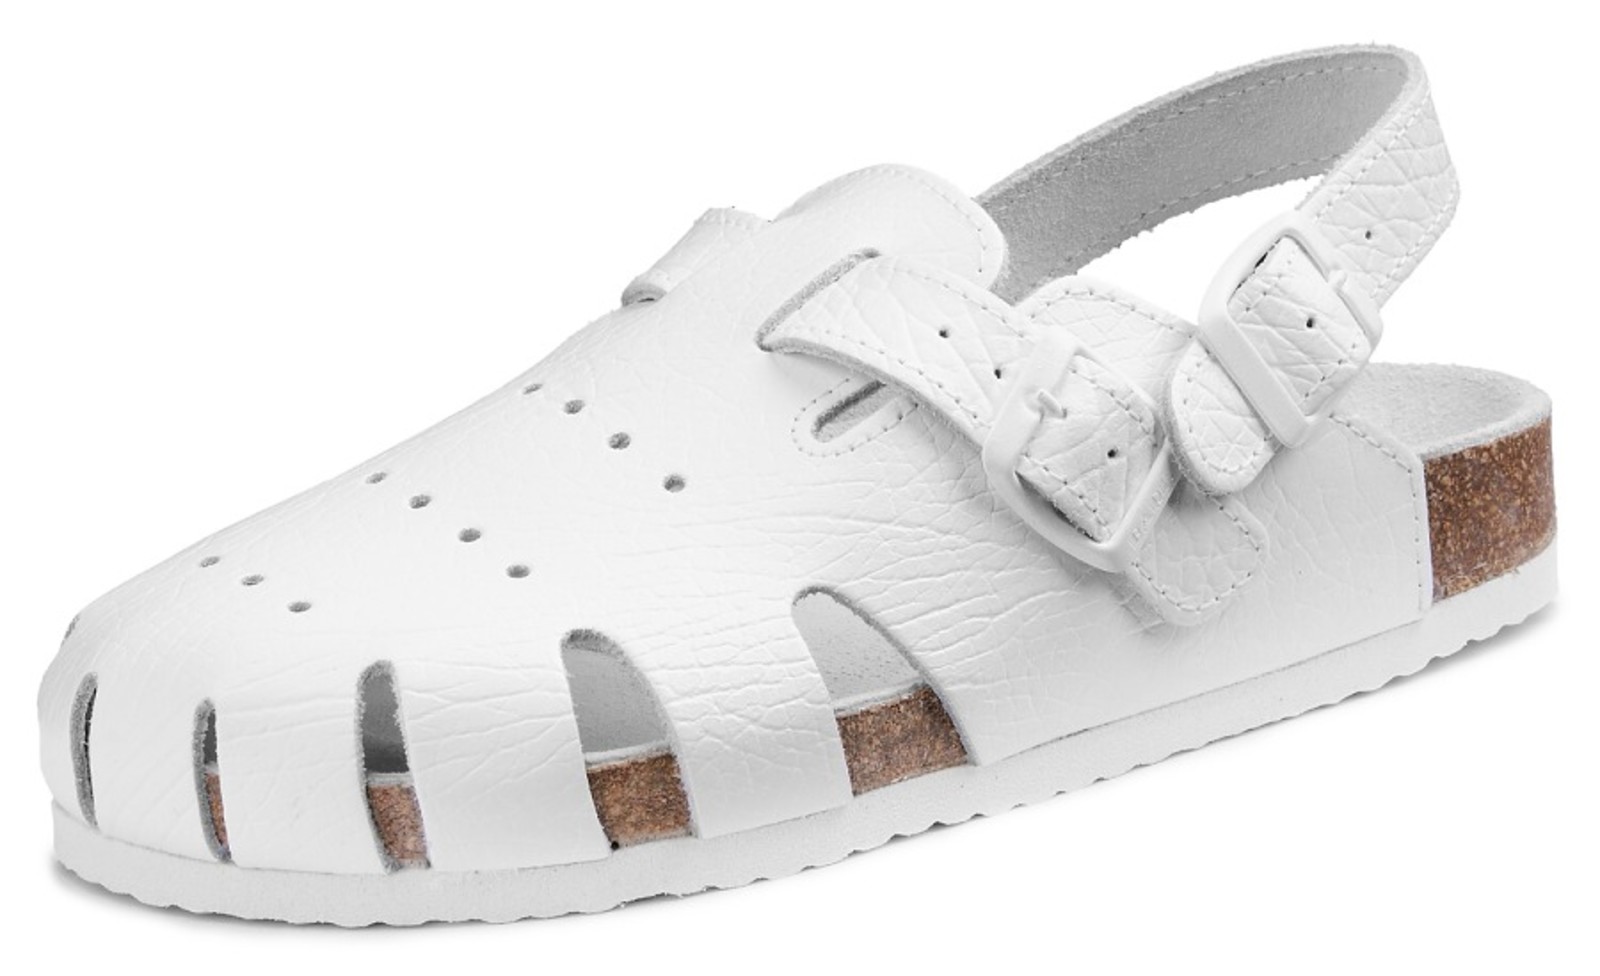 Ortopedické sandále Barea 090520 - veľkosť: 44, farba: biela